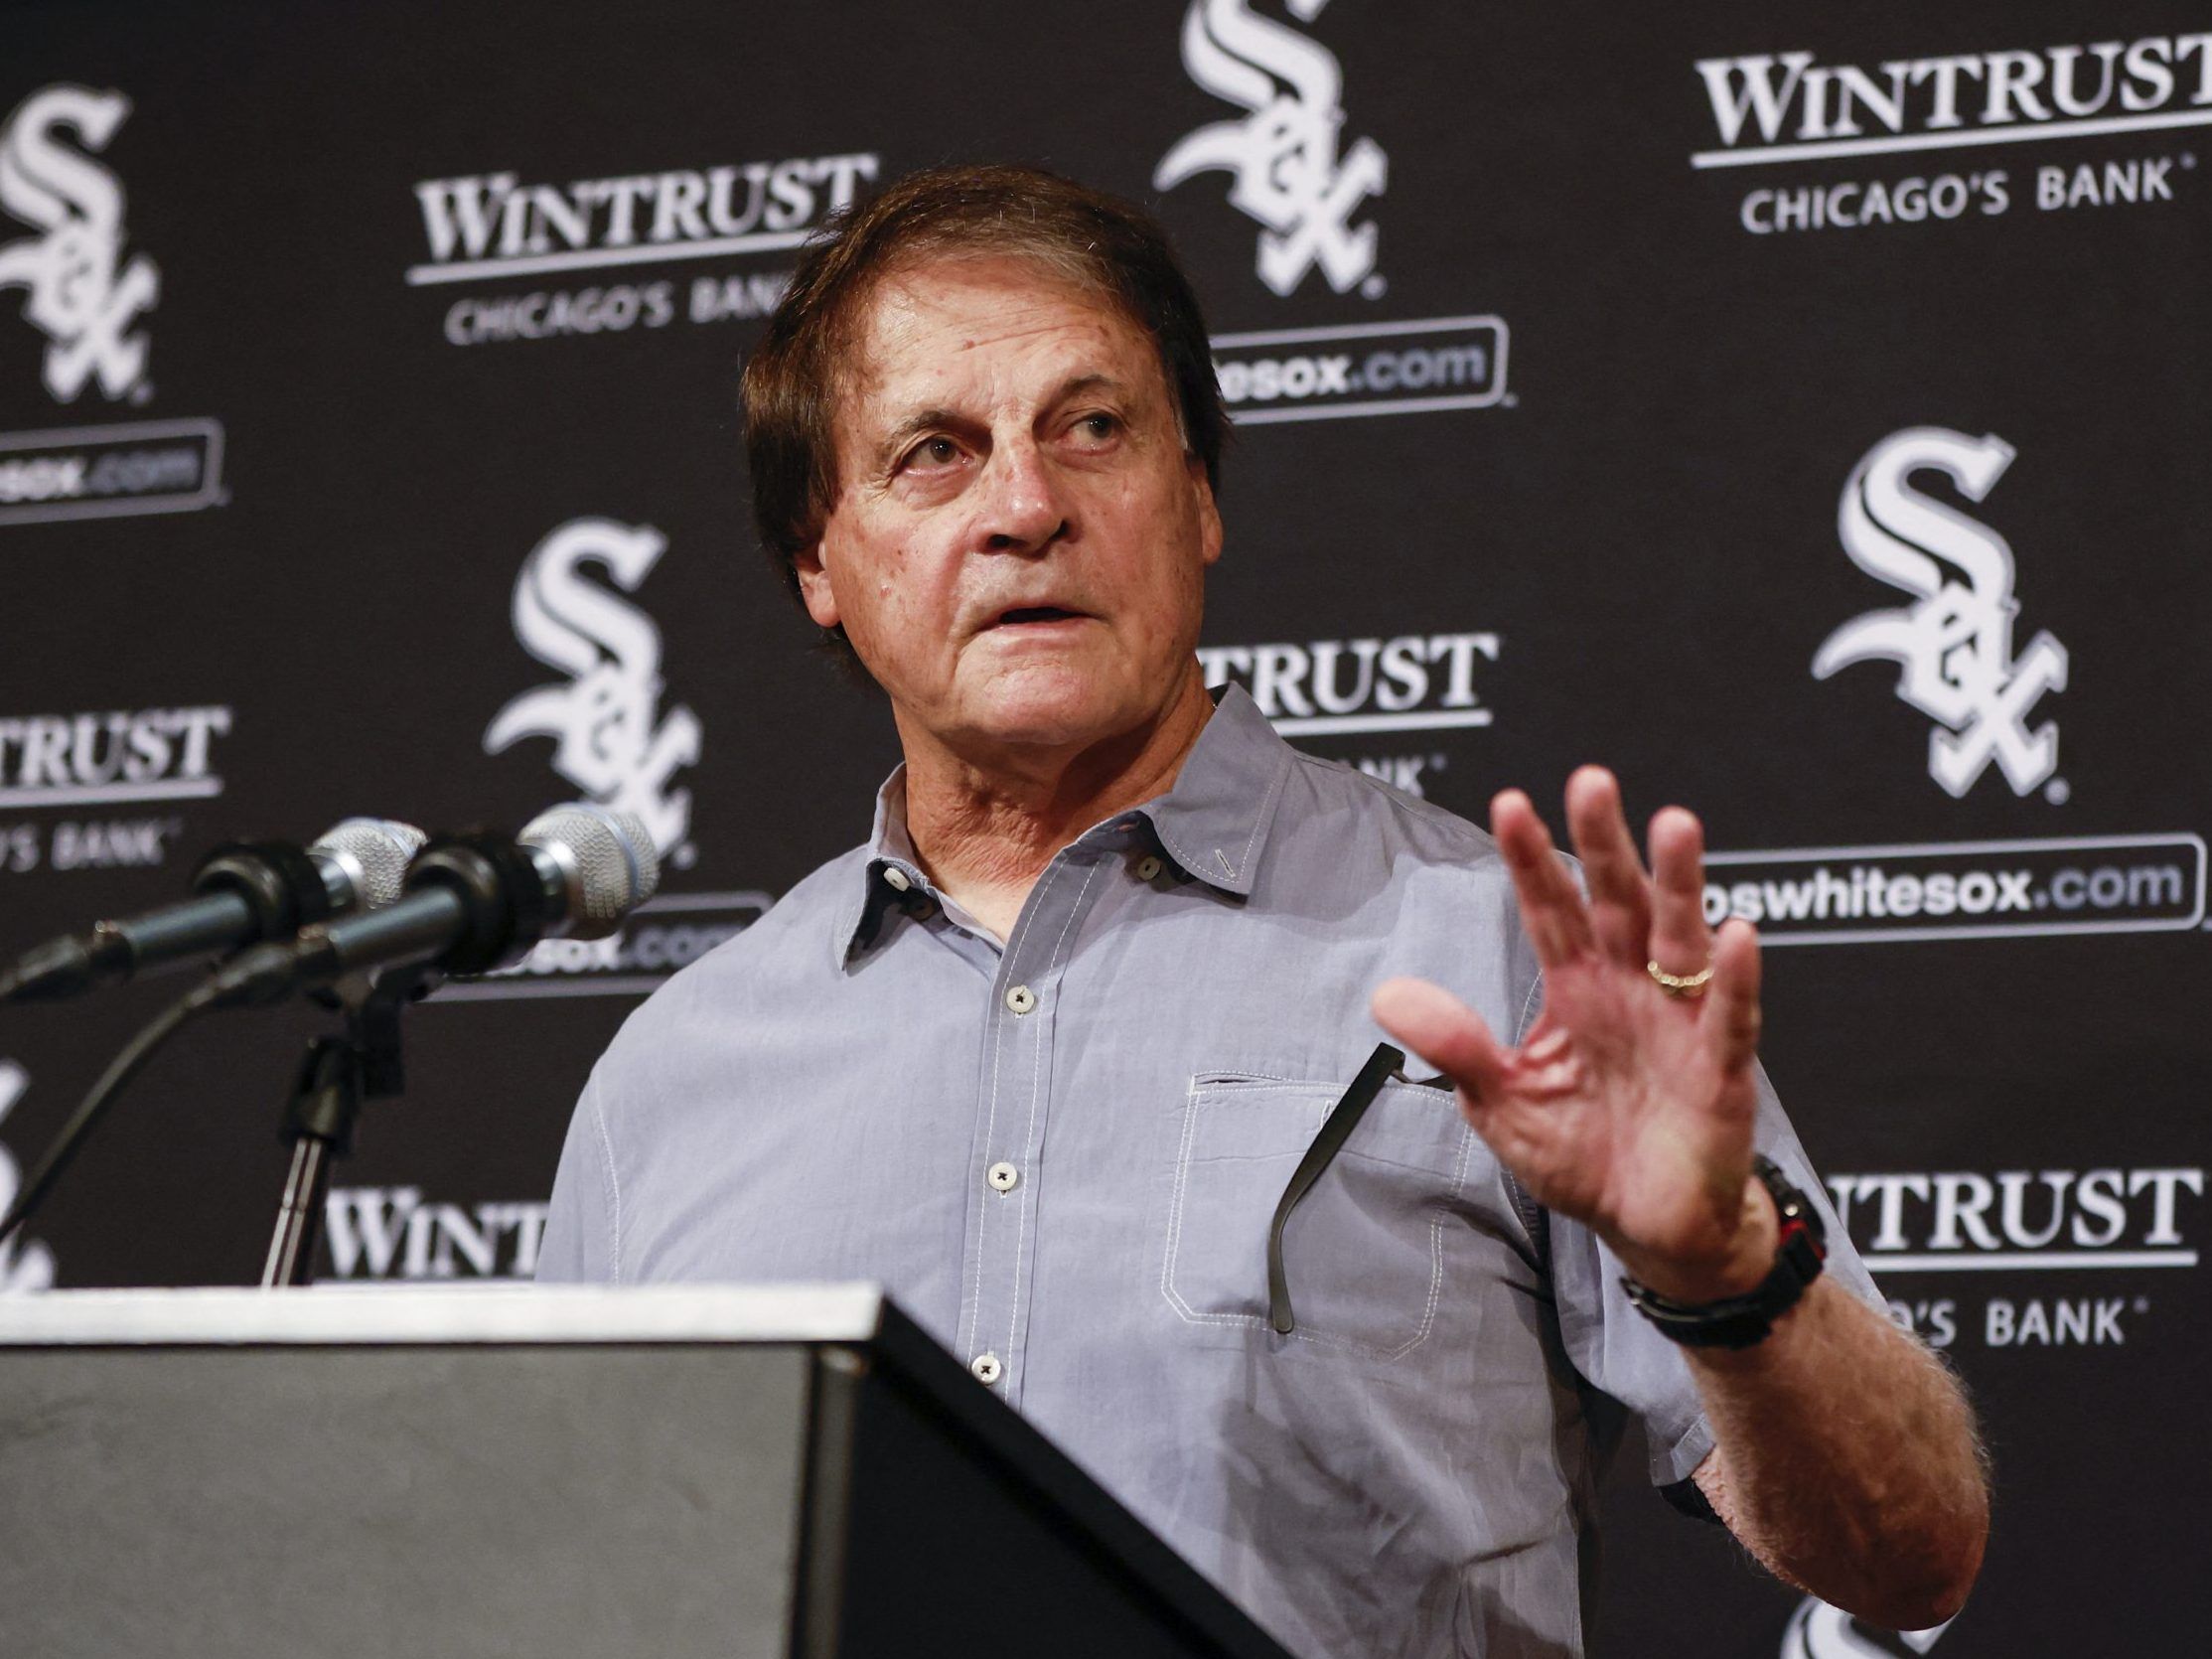 White Sox chairman Jerry Reinsdorf issues statement on Jose Abreu